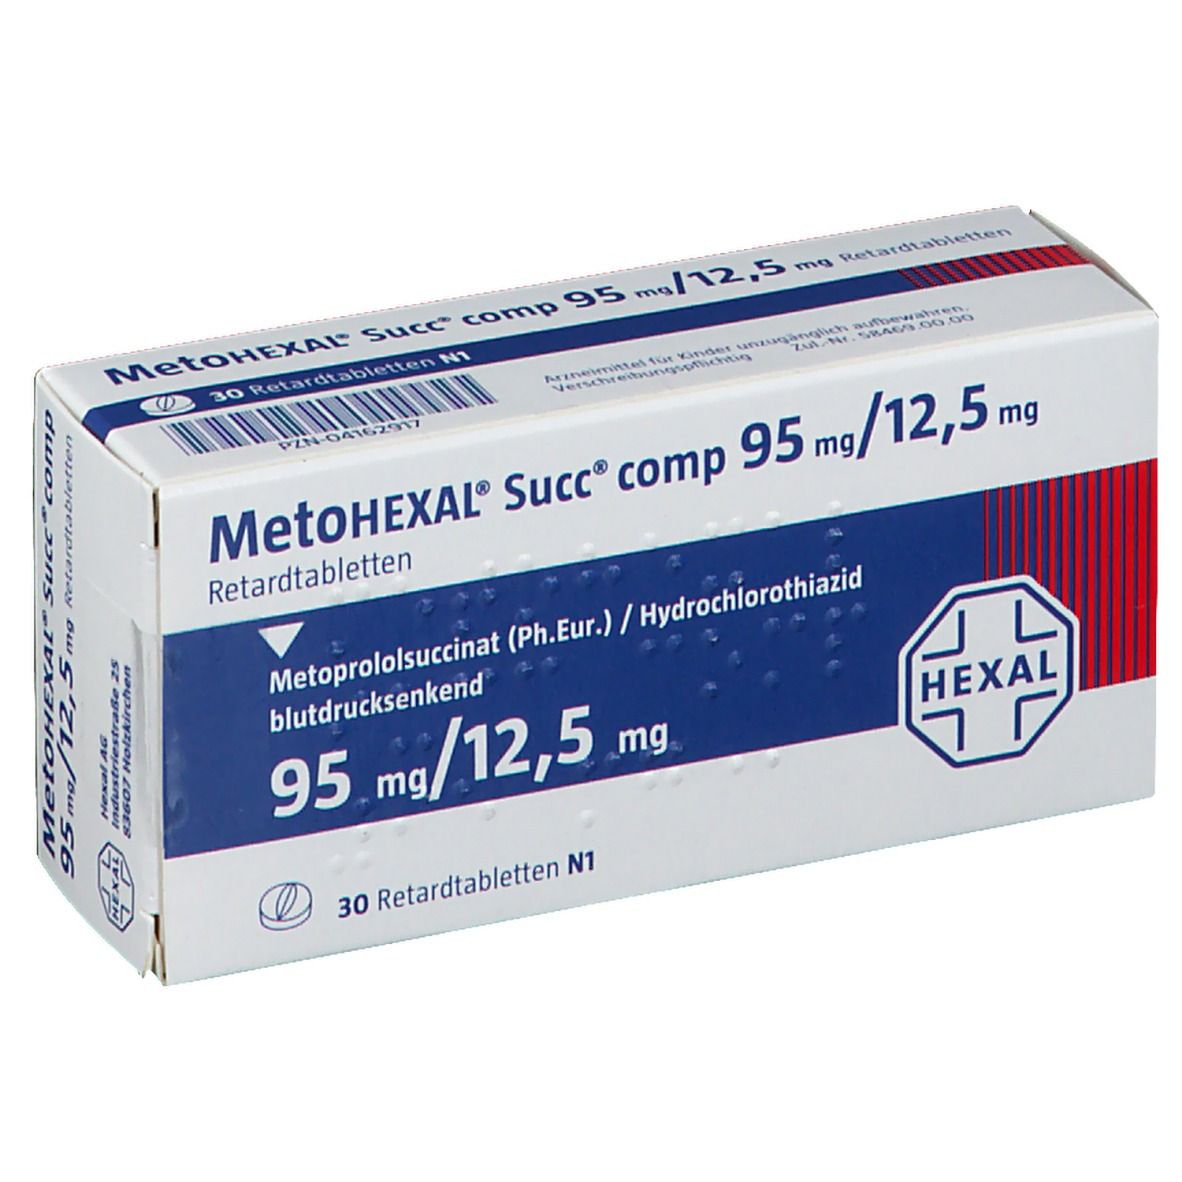 MetoHEXAL® Succ® comp 95 mg/12,5 mg